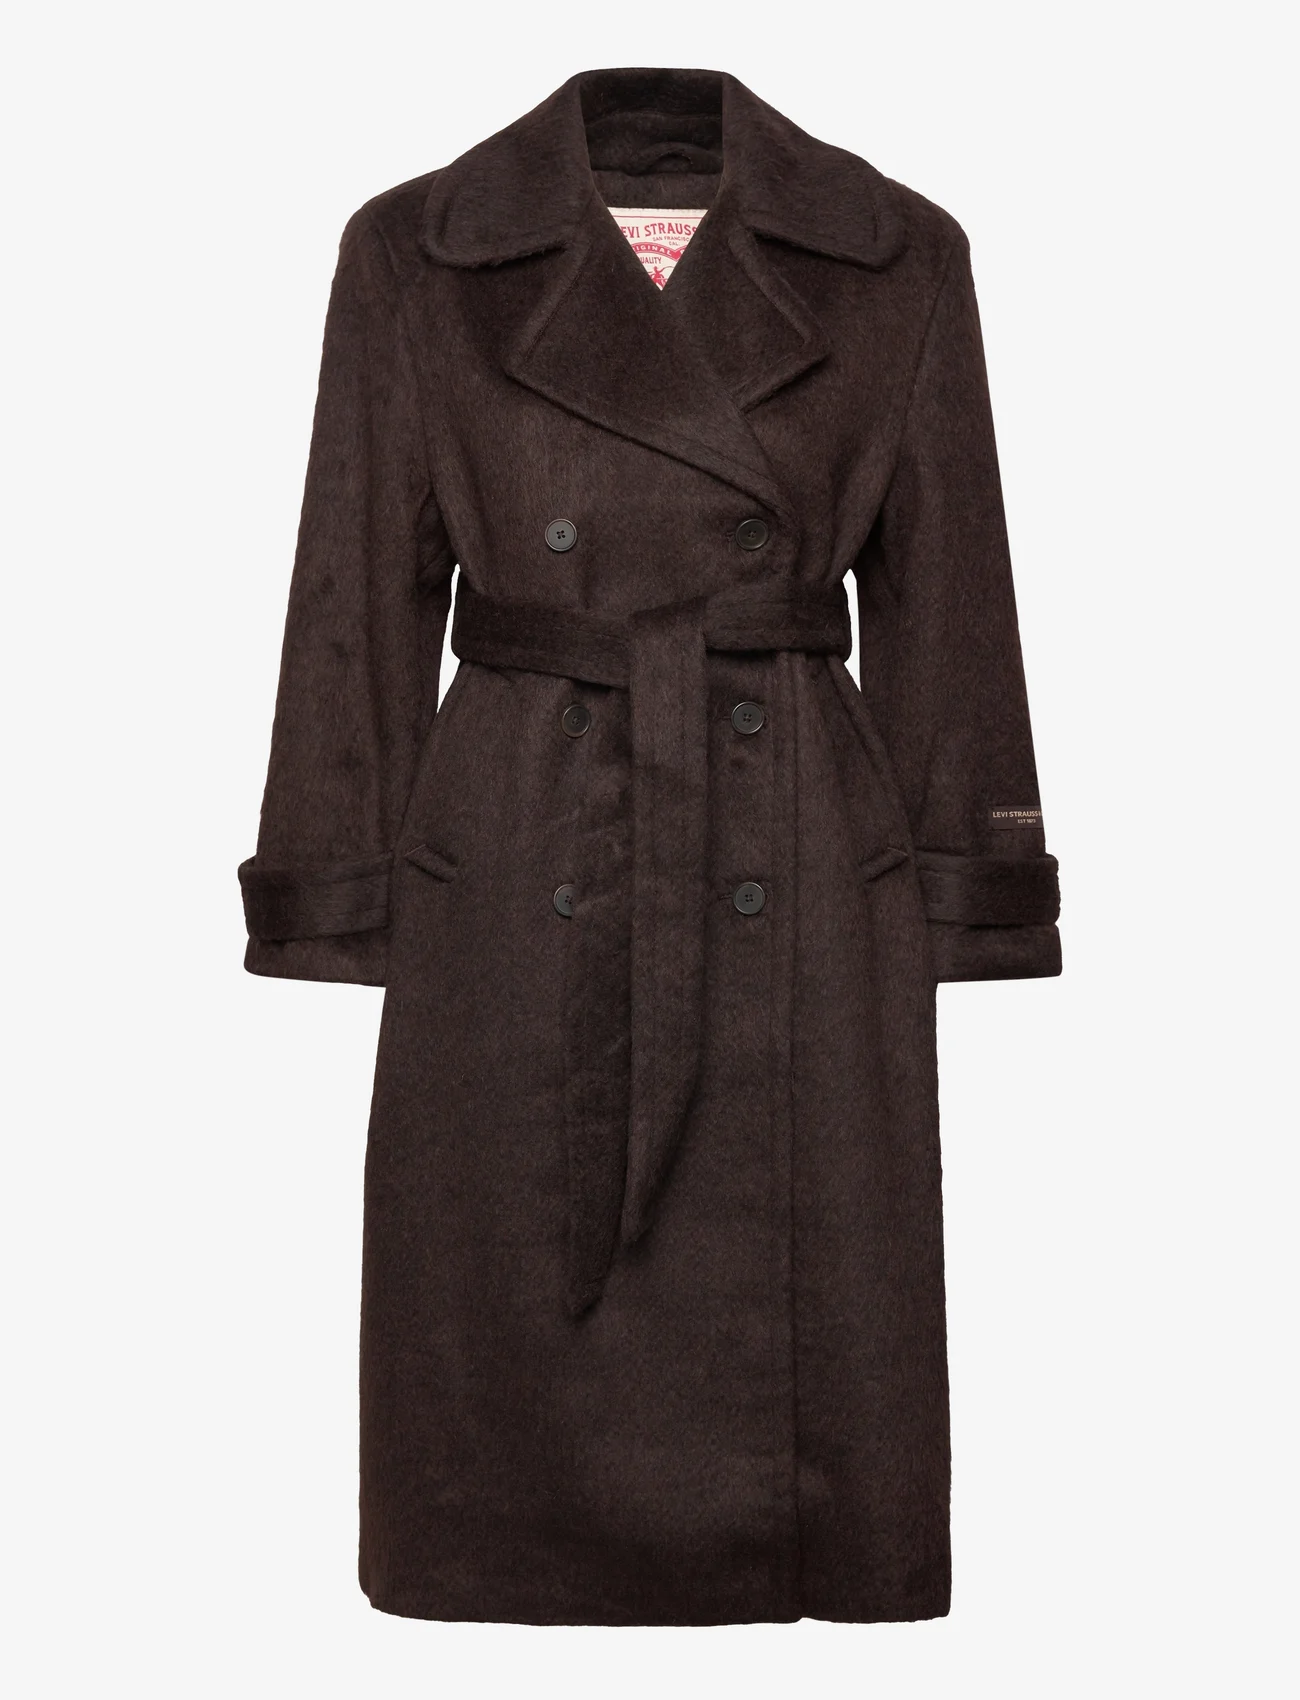 LEVI´S Women - WOOLY TRENCH COAT MOLE - winter coats - neutrals - 0